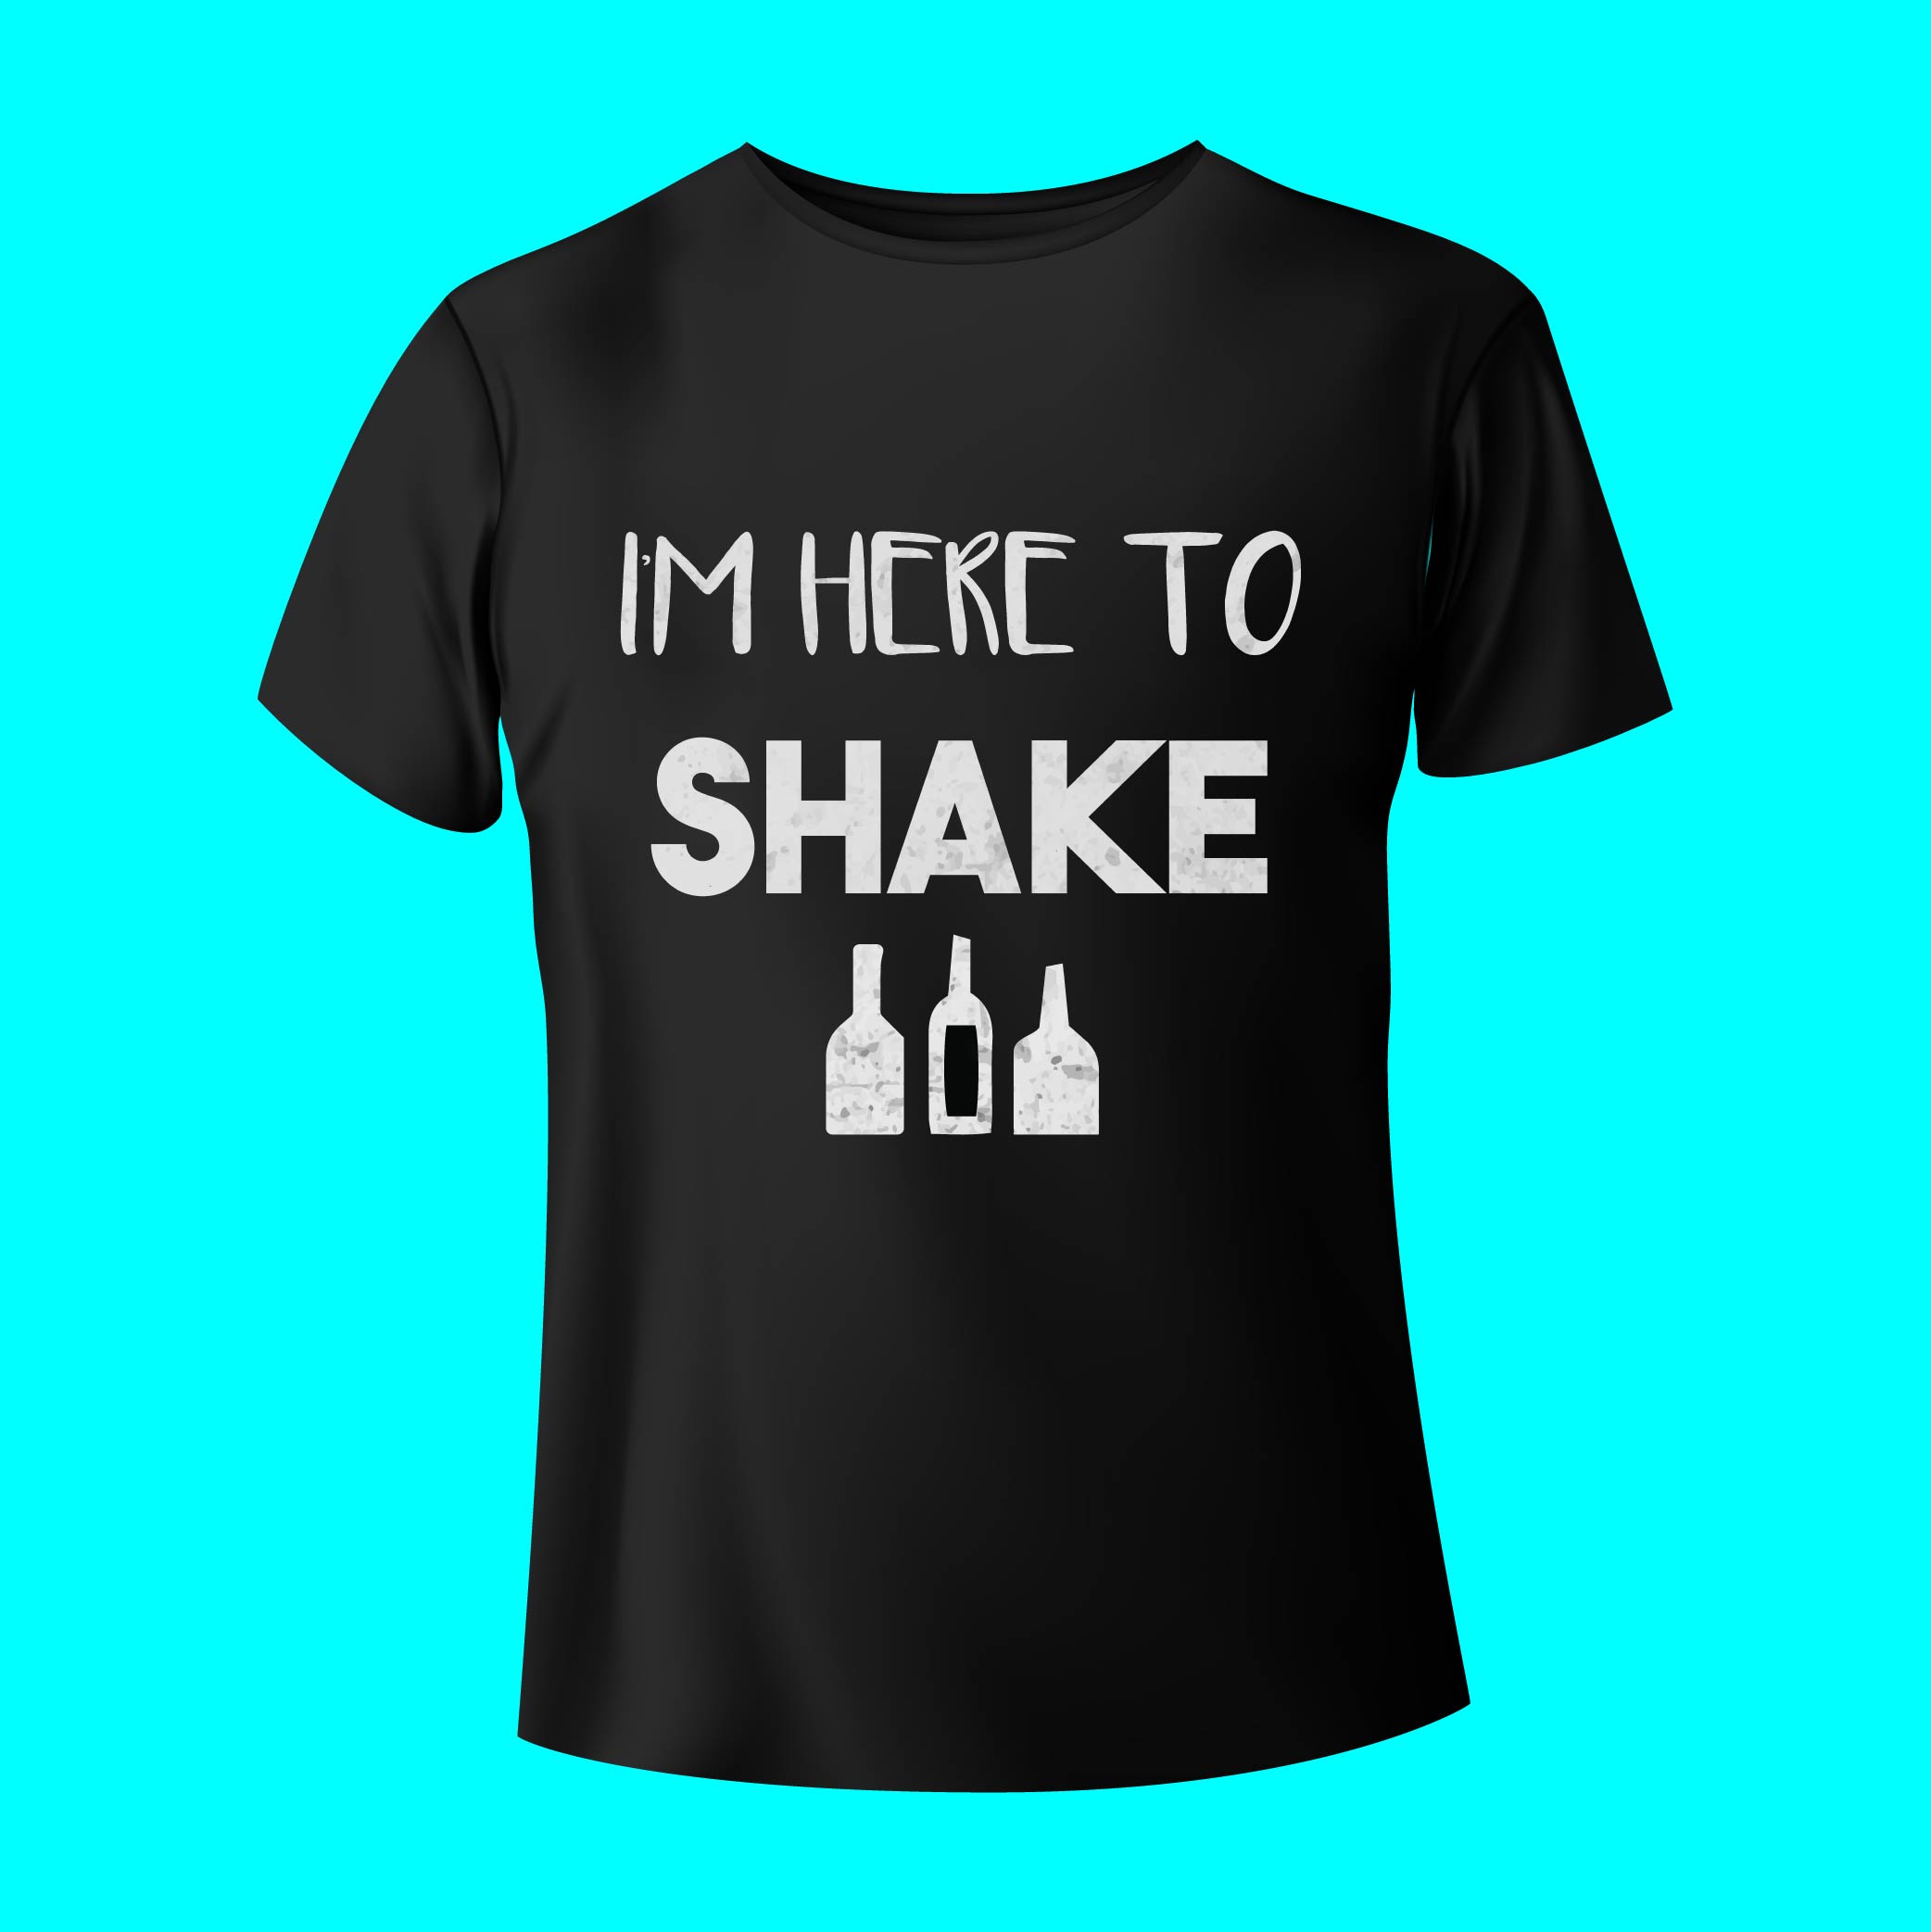 Black t - shirt that says i'm here to shake.